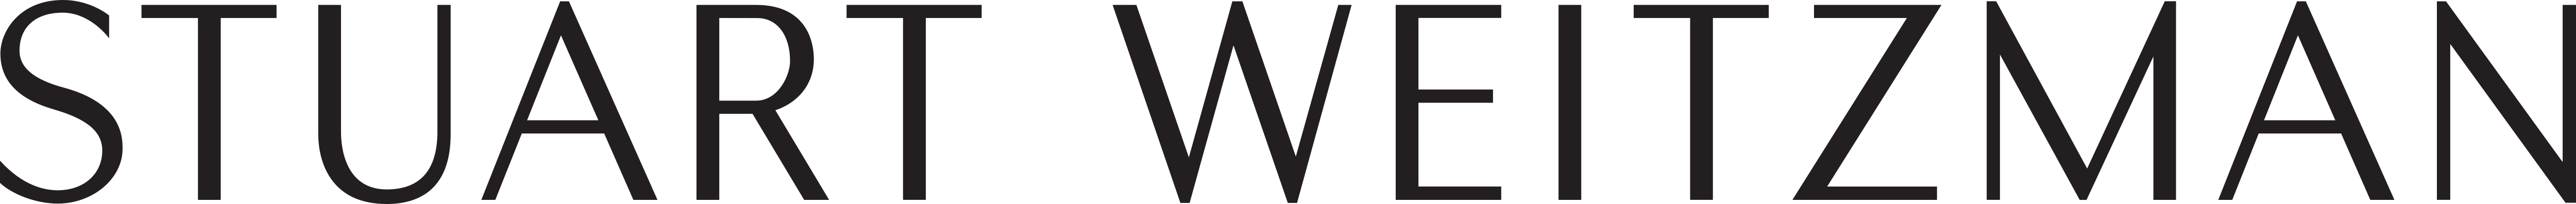 Stuart_Weitzman_Logo_horizontally